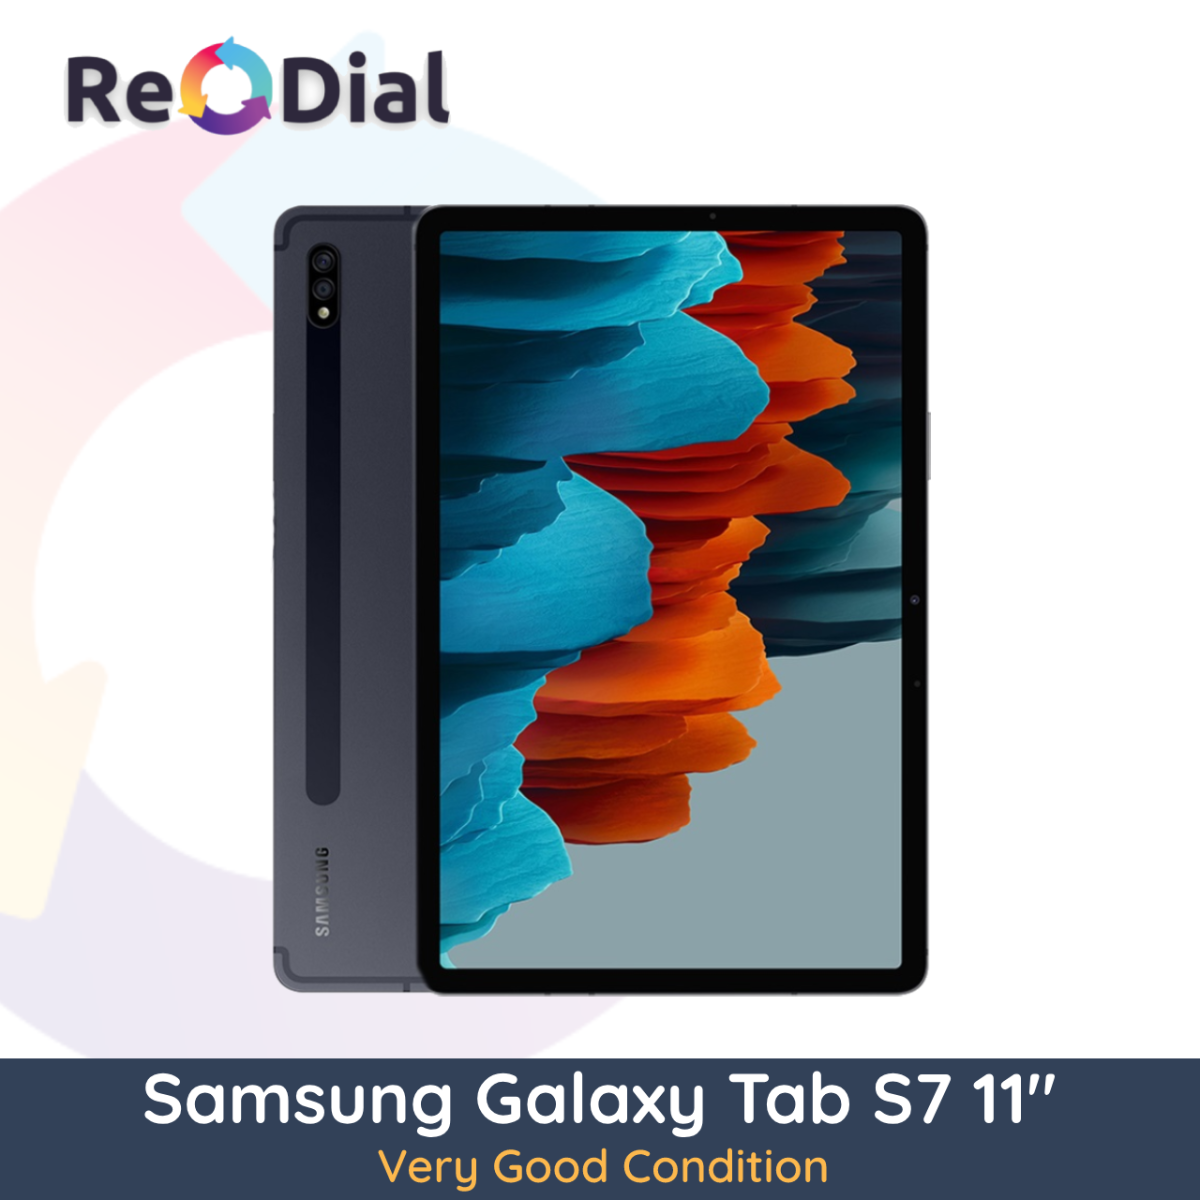 Samsung Galaxy Tab S7 11" (2020) WiFi + Cellular - Very Good Condition